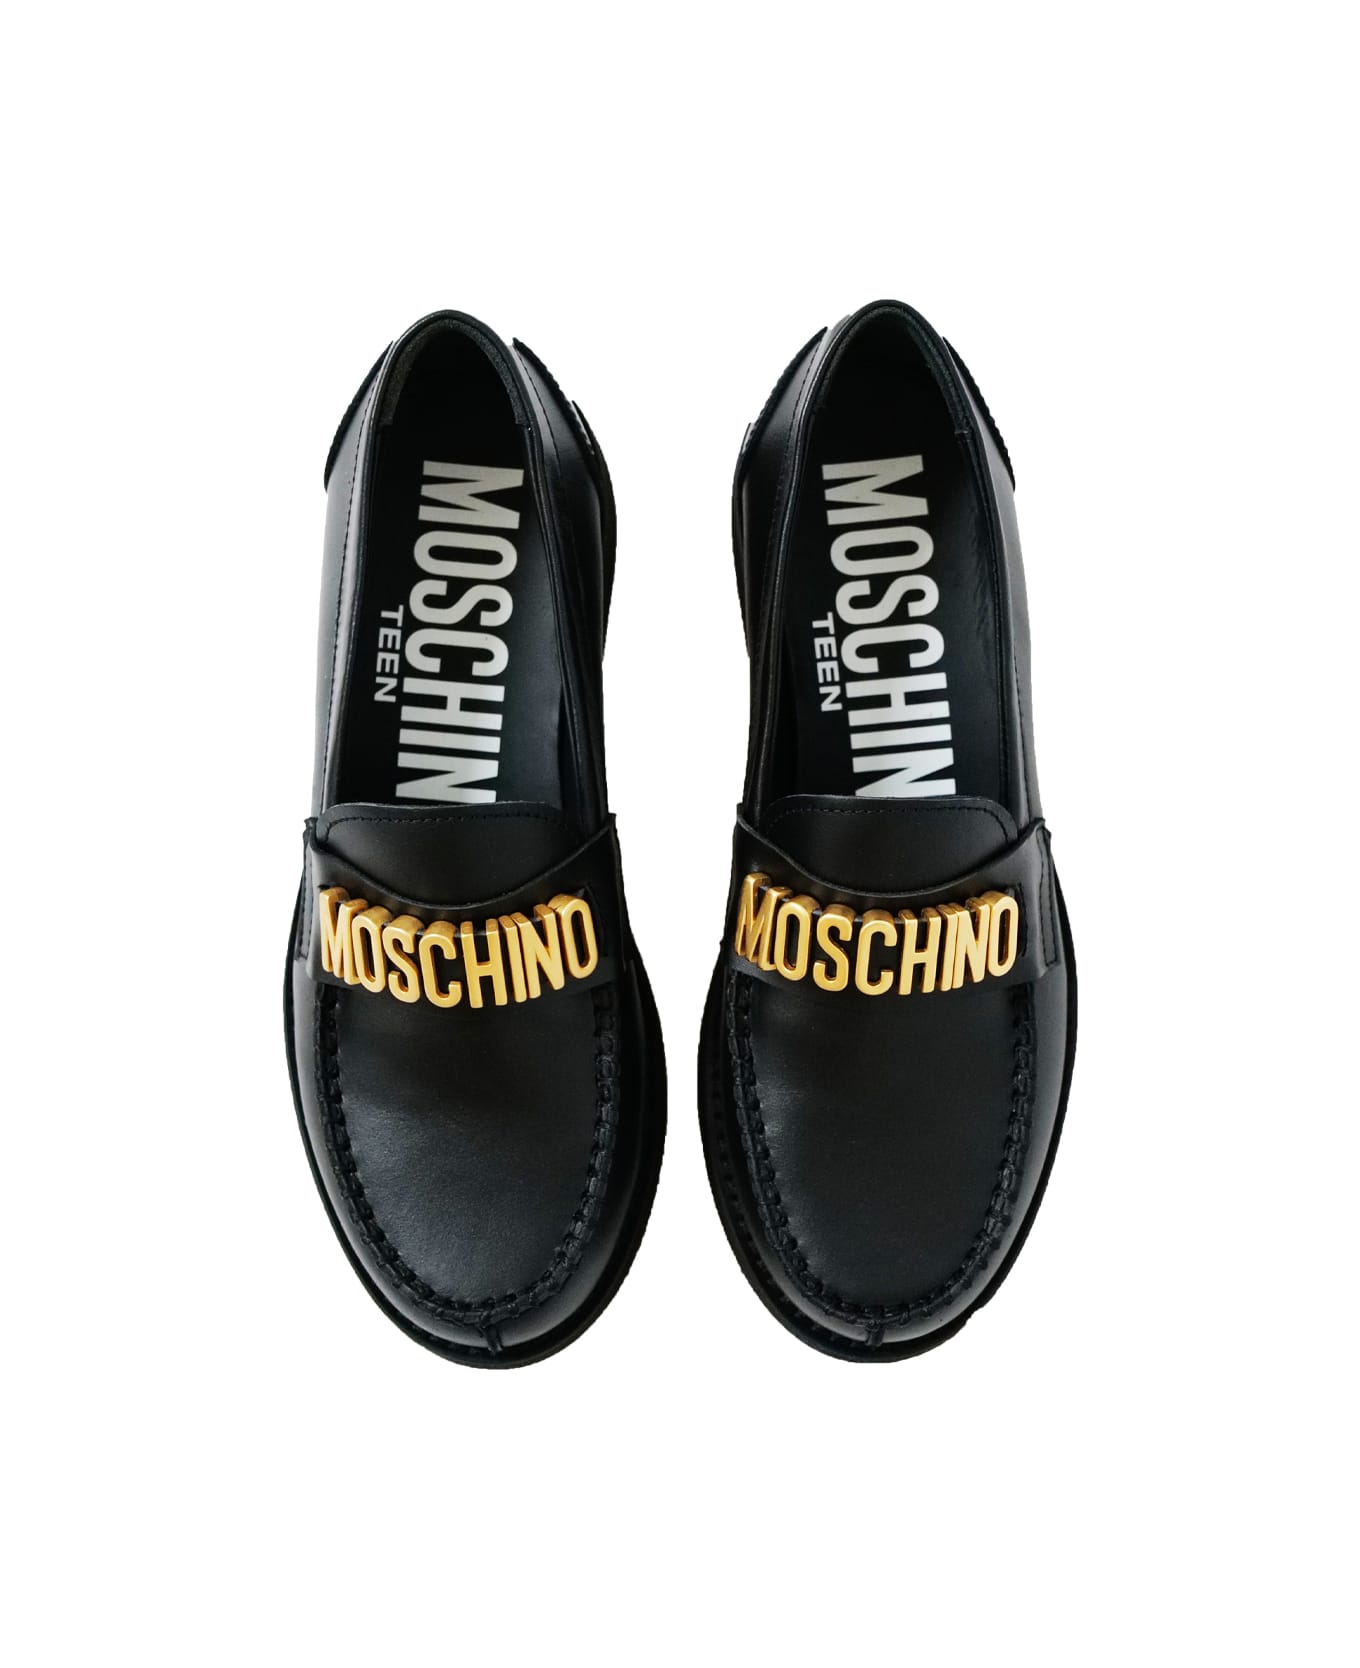 Moschino Mocassin - Back